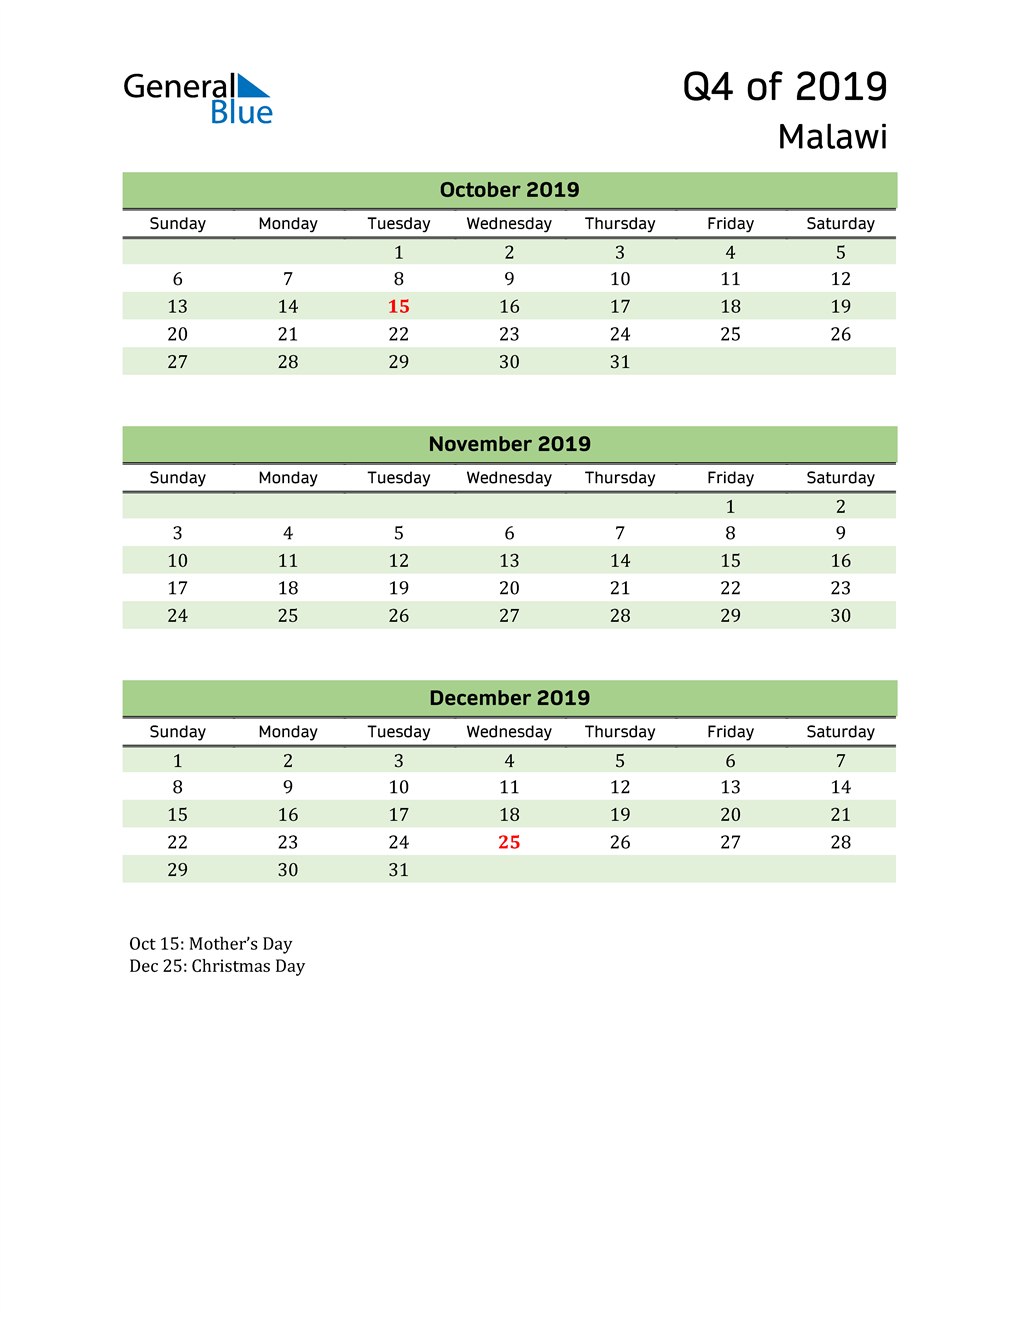  Quarterly Calendar 2019 with Malawi Holidays 